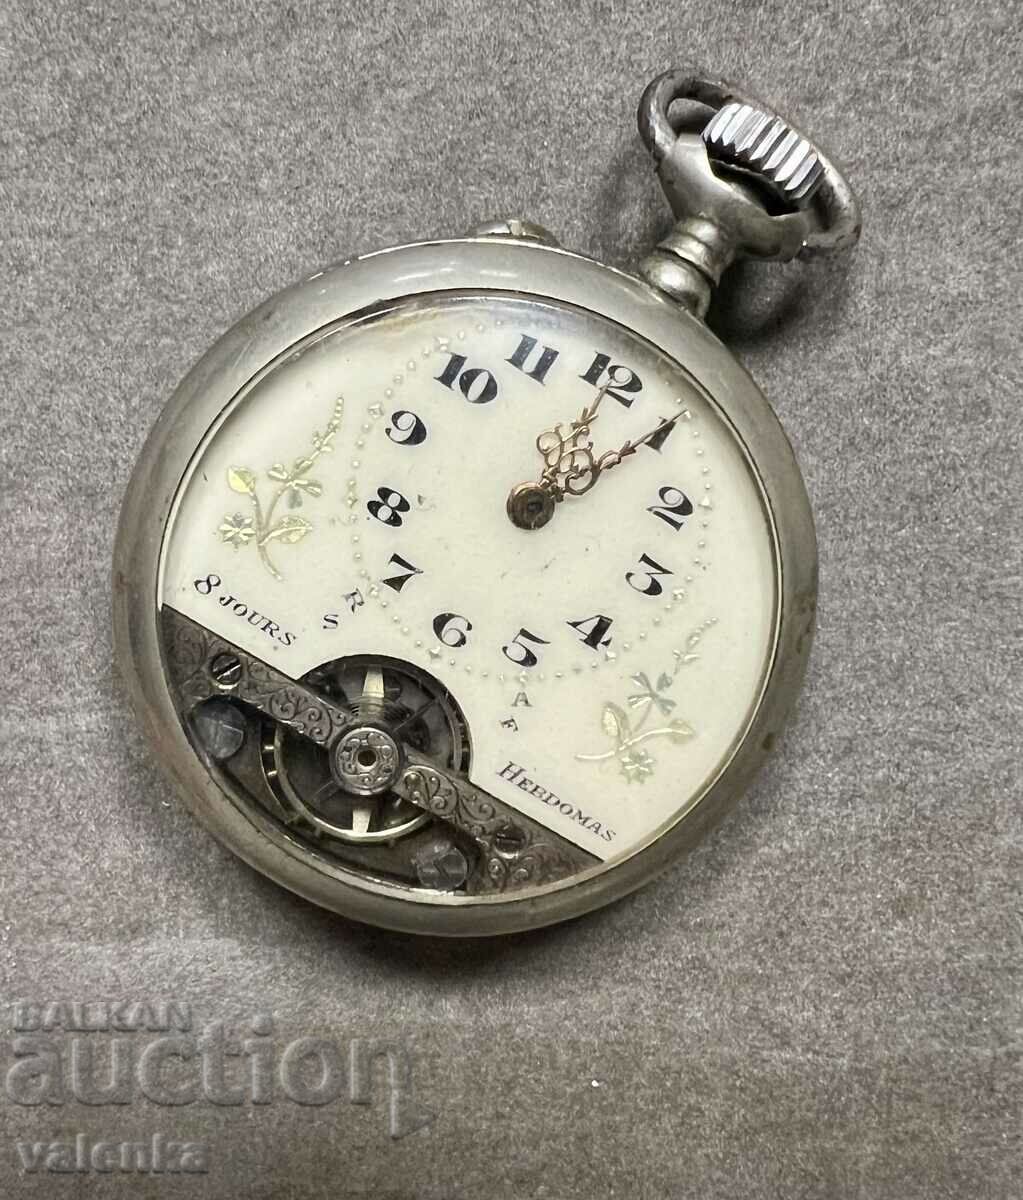 Old pocket watch - Hebdomas 8 days